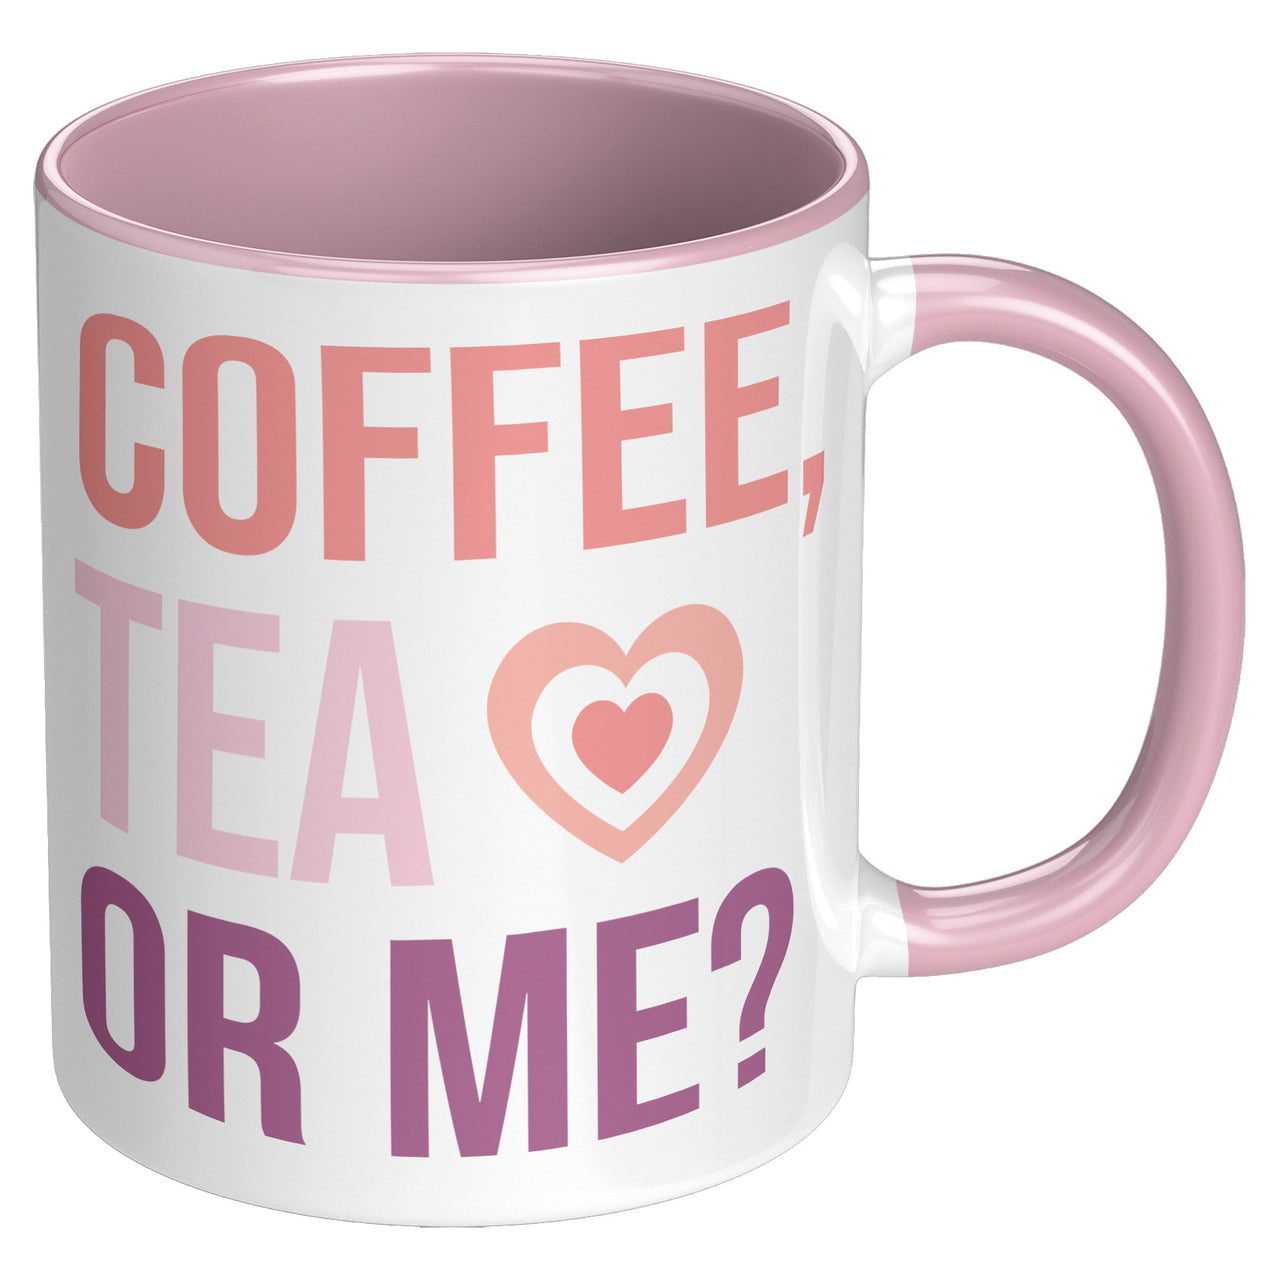 Valentine's Day Mug - Coffee Tea or Me